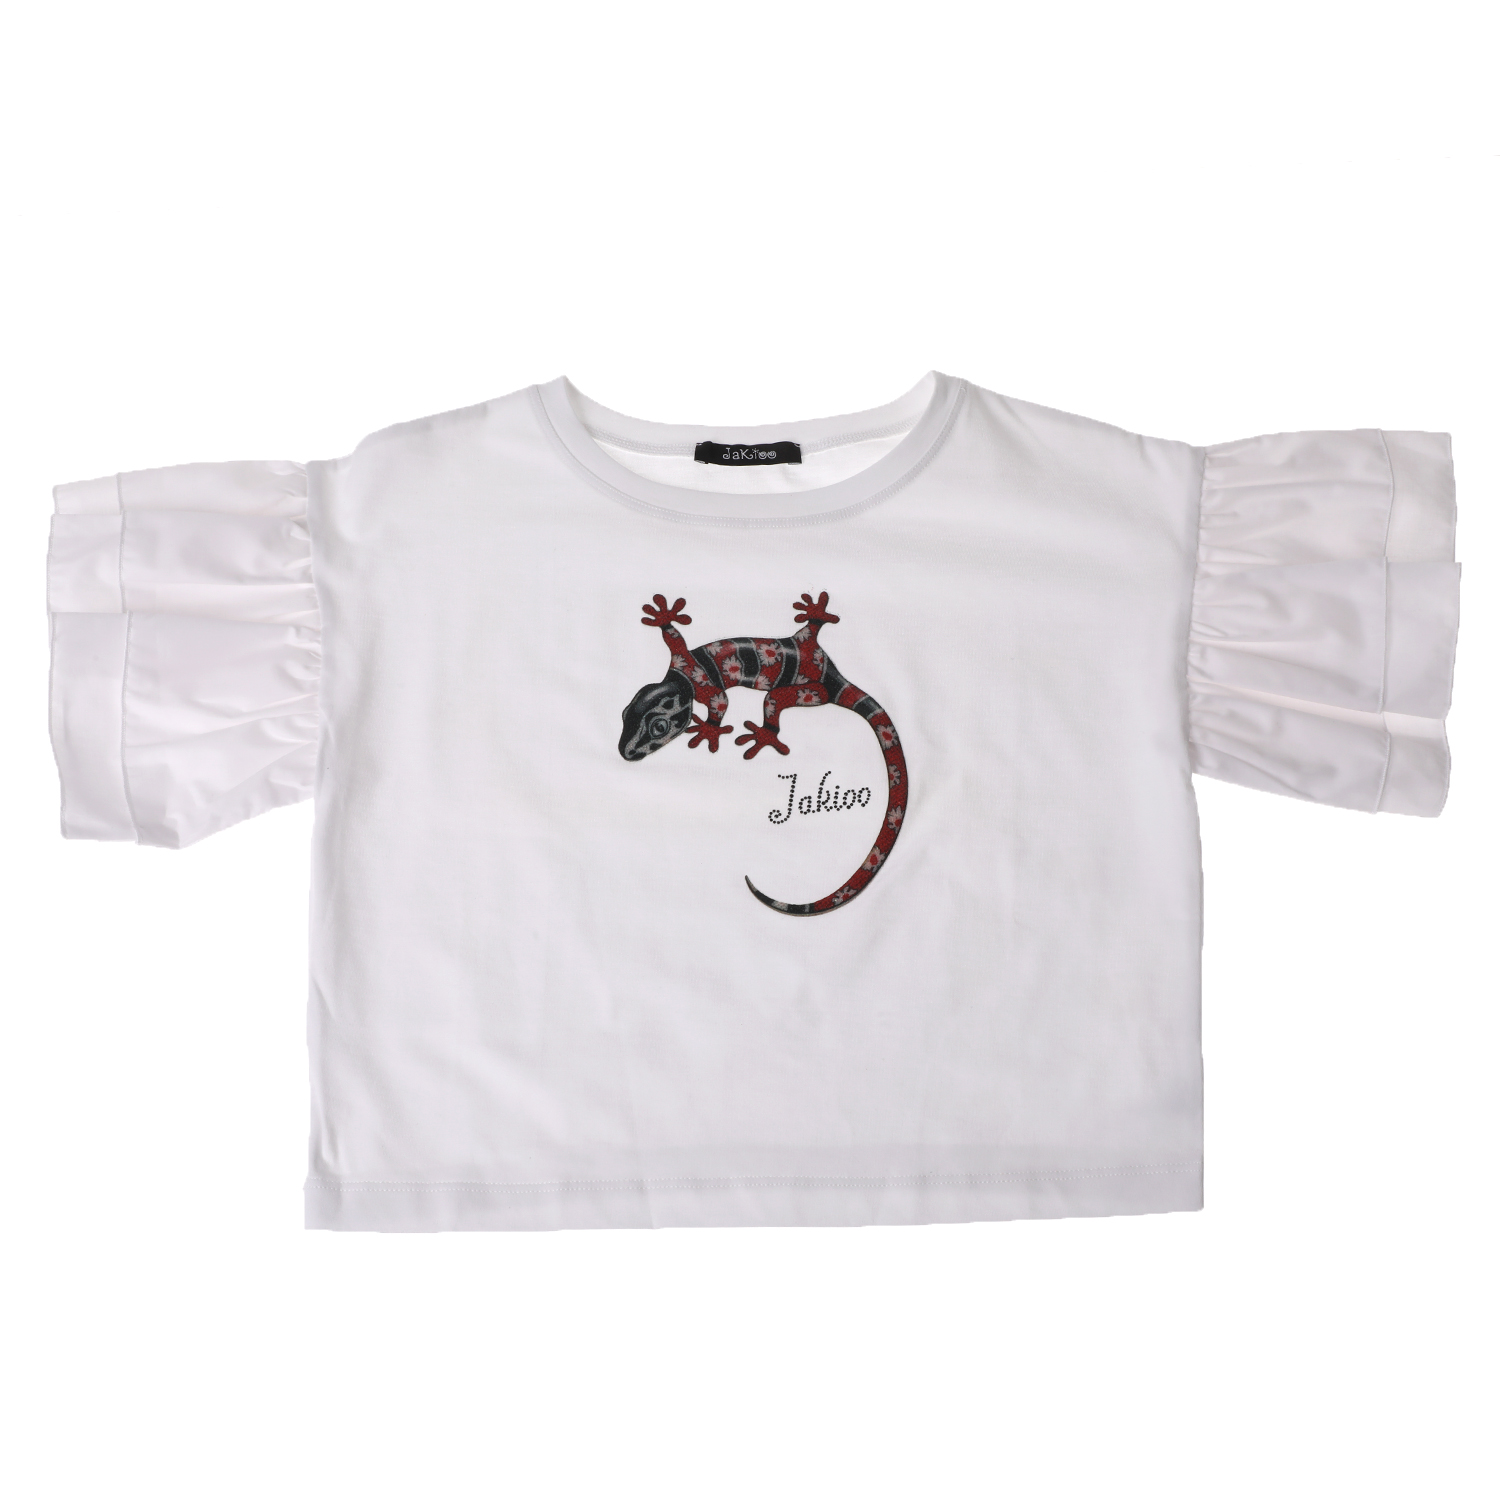 JAKIOO - Παιδικό κοντομάνικο μπλουζάκι JAKIOO CORTA APPL. λευκό Παιδικά/Girls/Ρούχα/Μπλούζες Κοντομάνικες-Αμάνικες